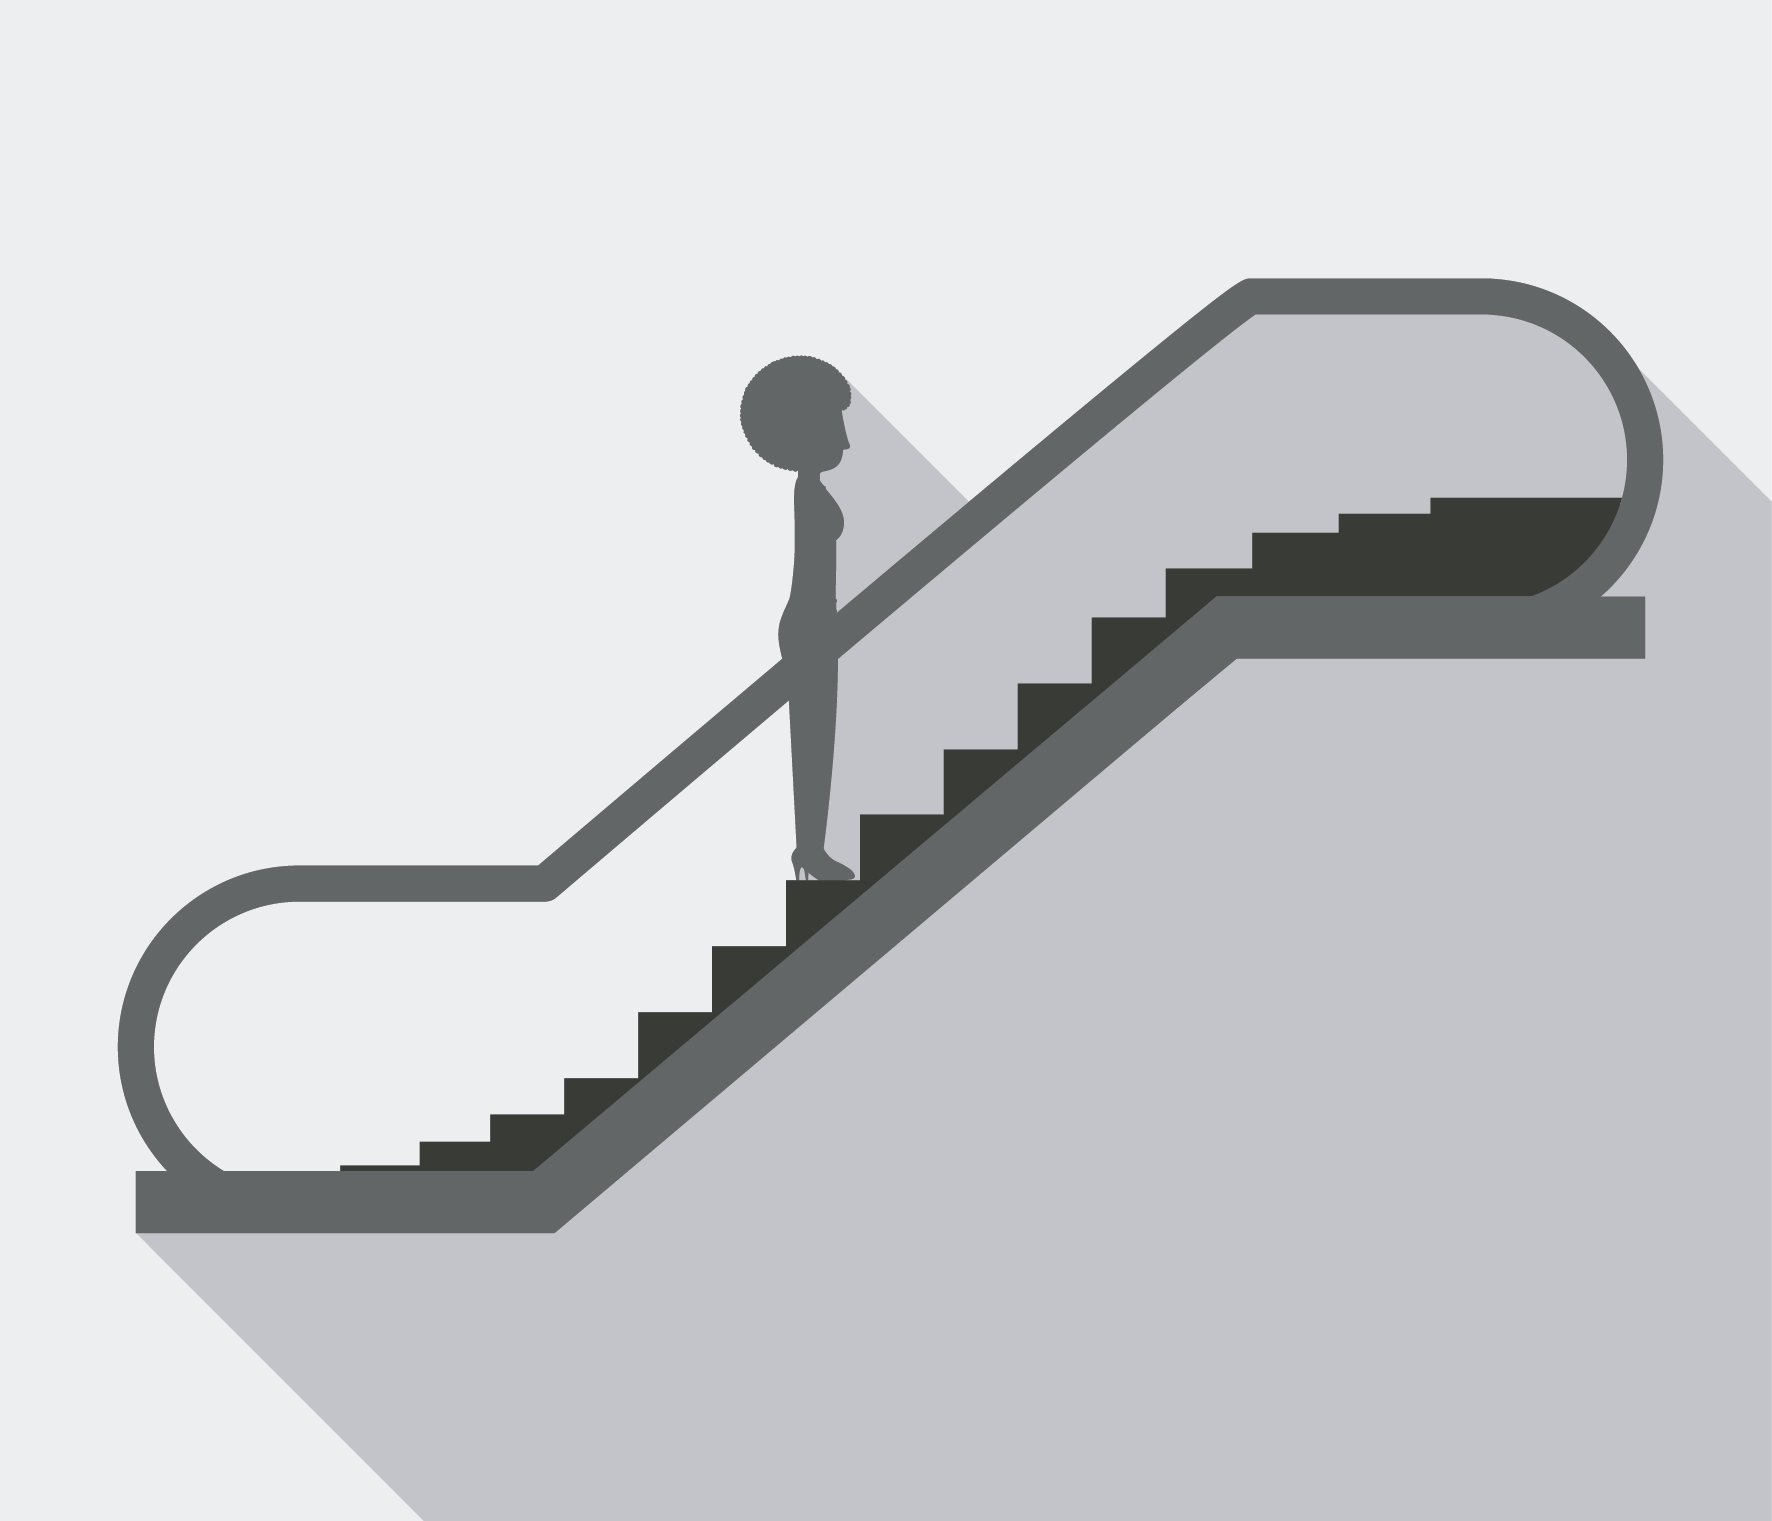 Image of a person riding an escalator upward